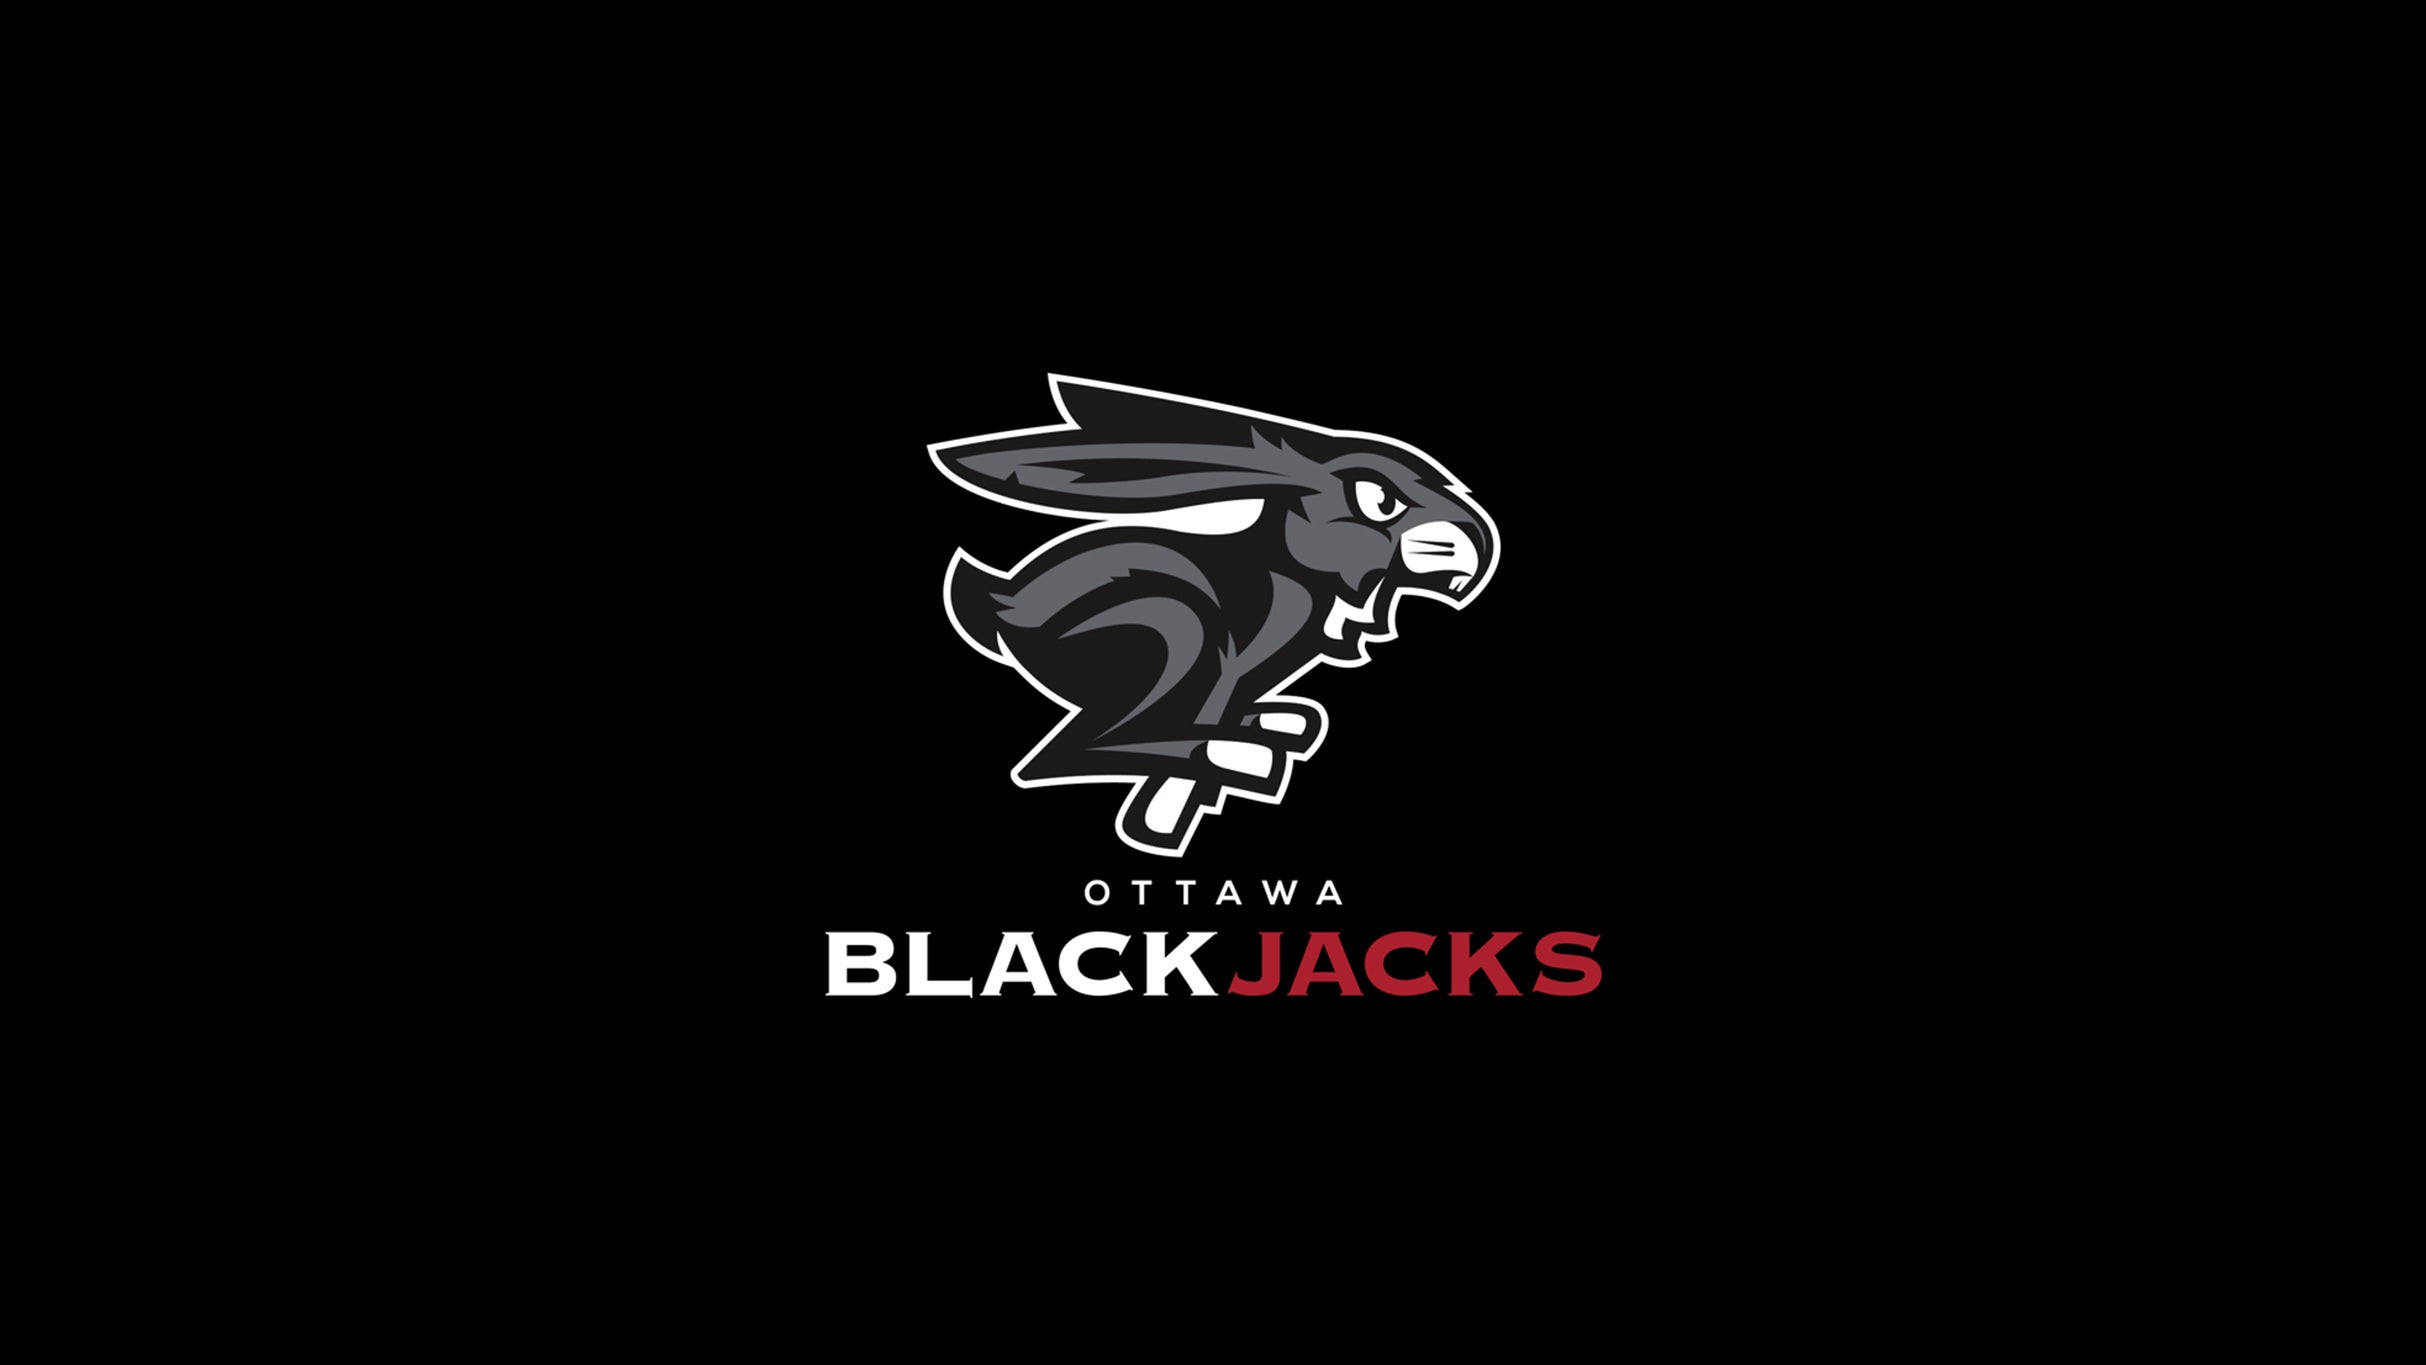 Ottawa BlackJacks vs. Calgary Surge presale password for advance tickets in Ottawa